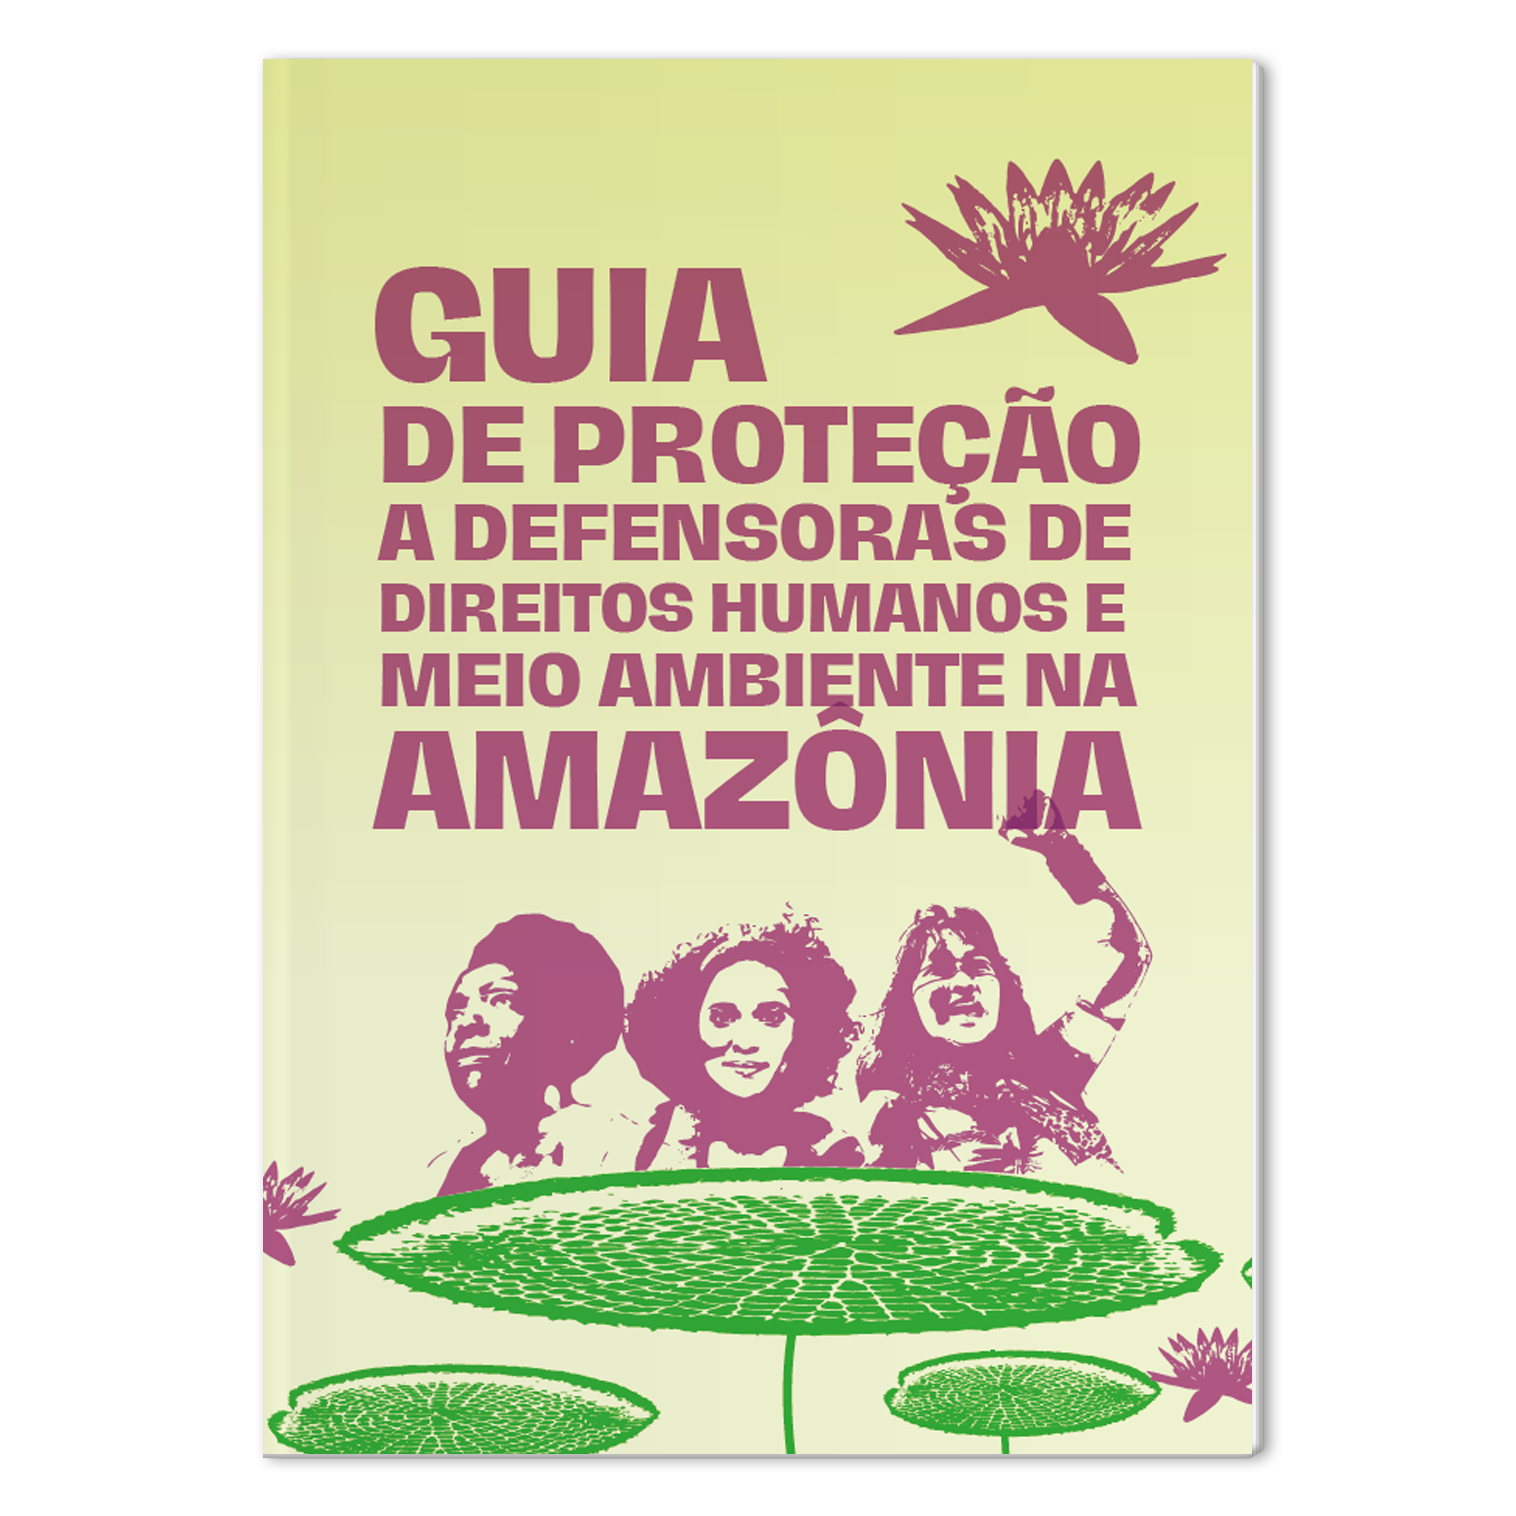 Mock-Mag-guia-defensoras-amazonia